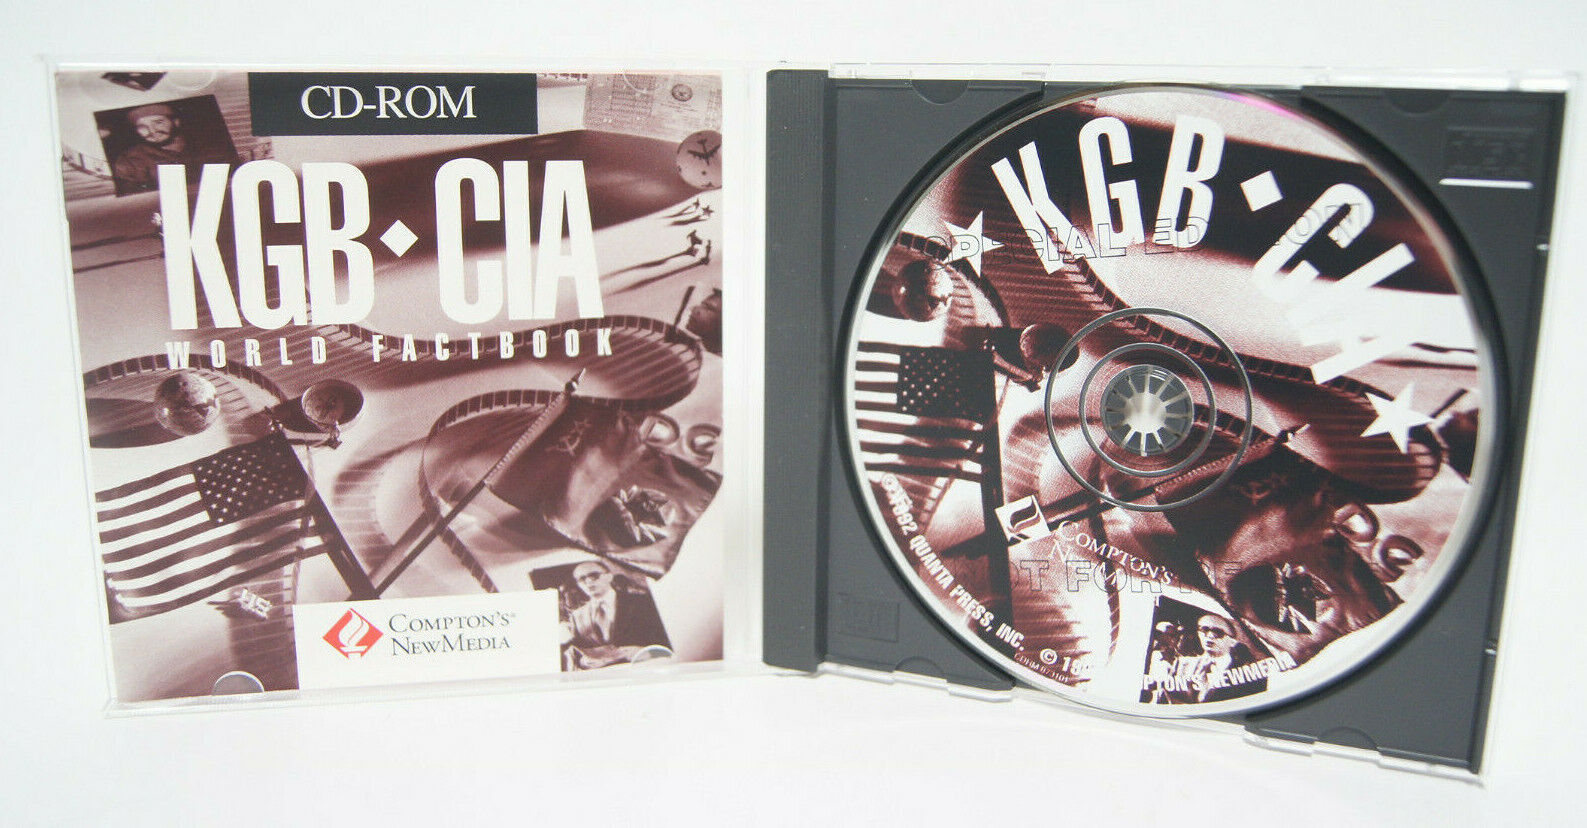 KGB CIA World Factbook Compton's NewMedia 1992 PC Computer Software Program